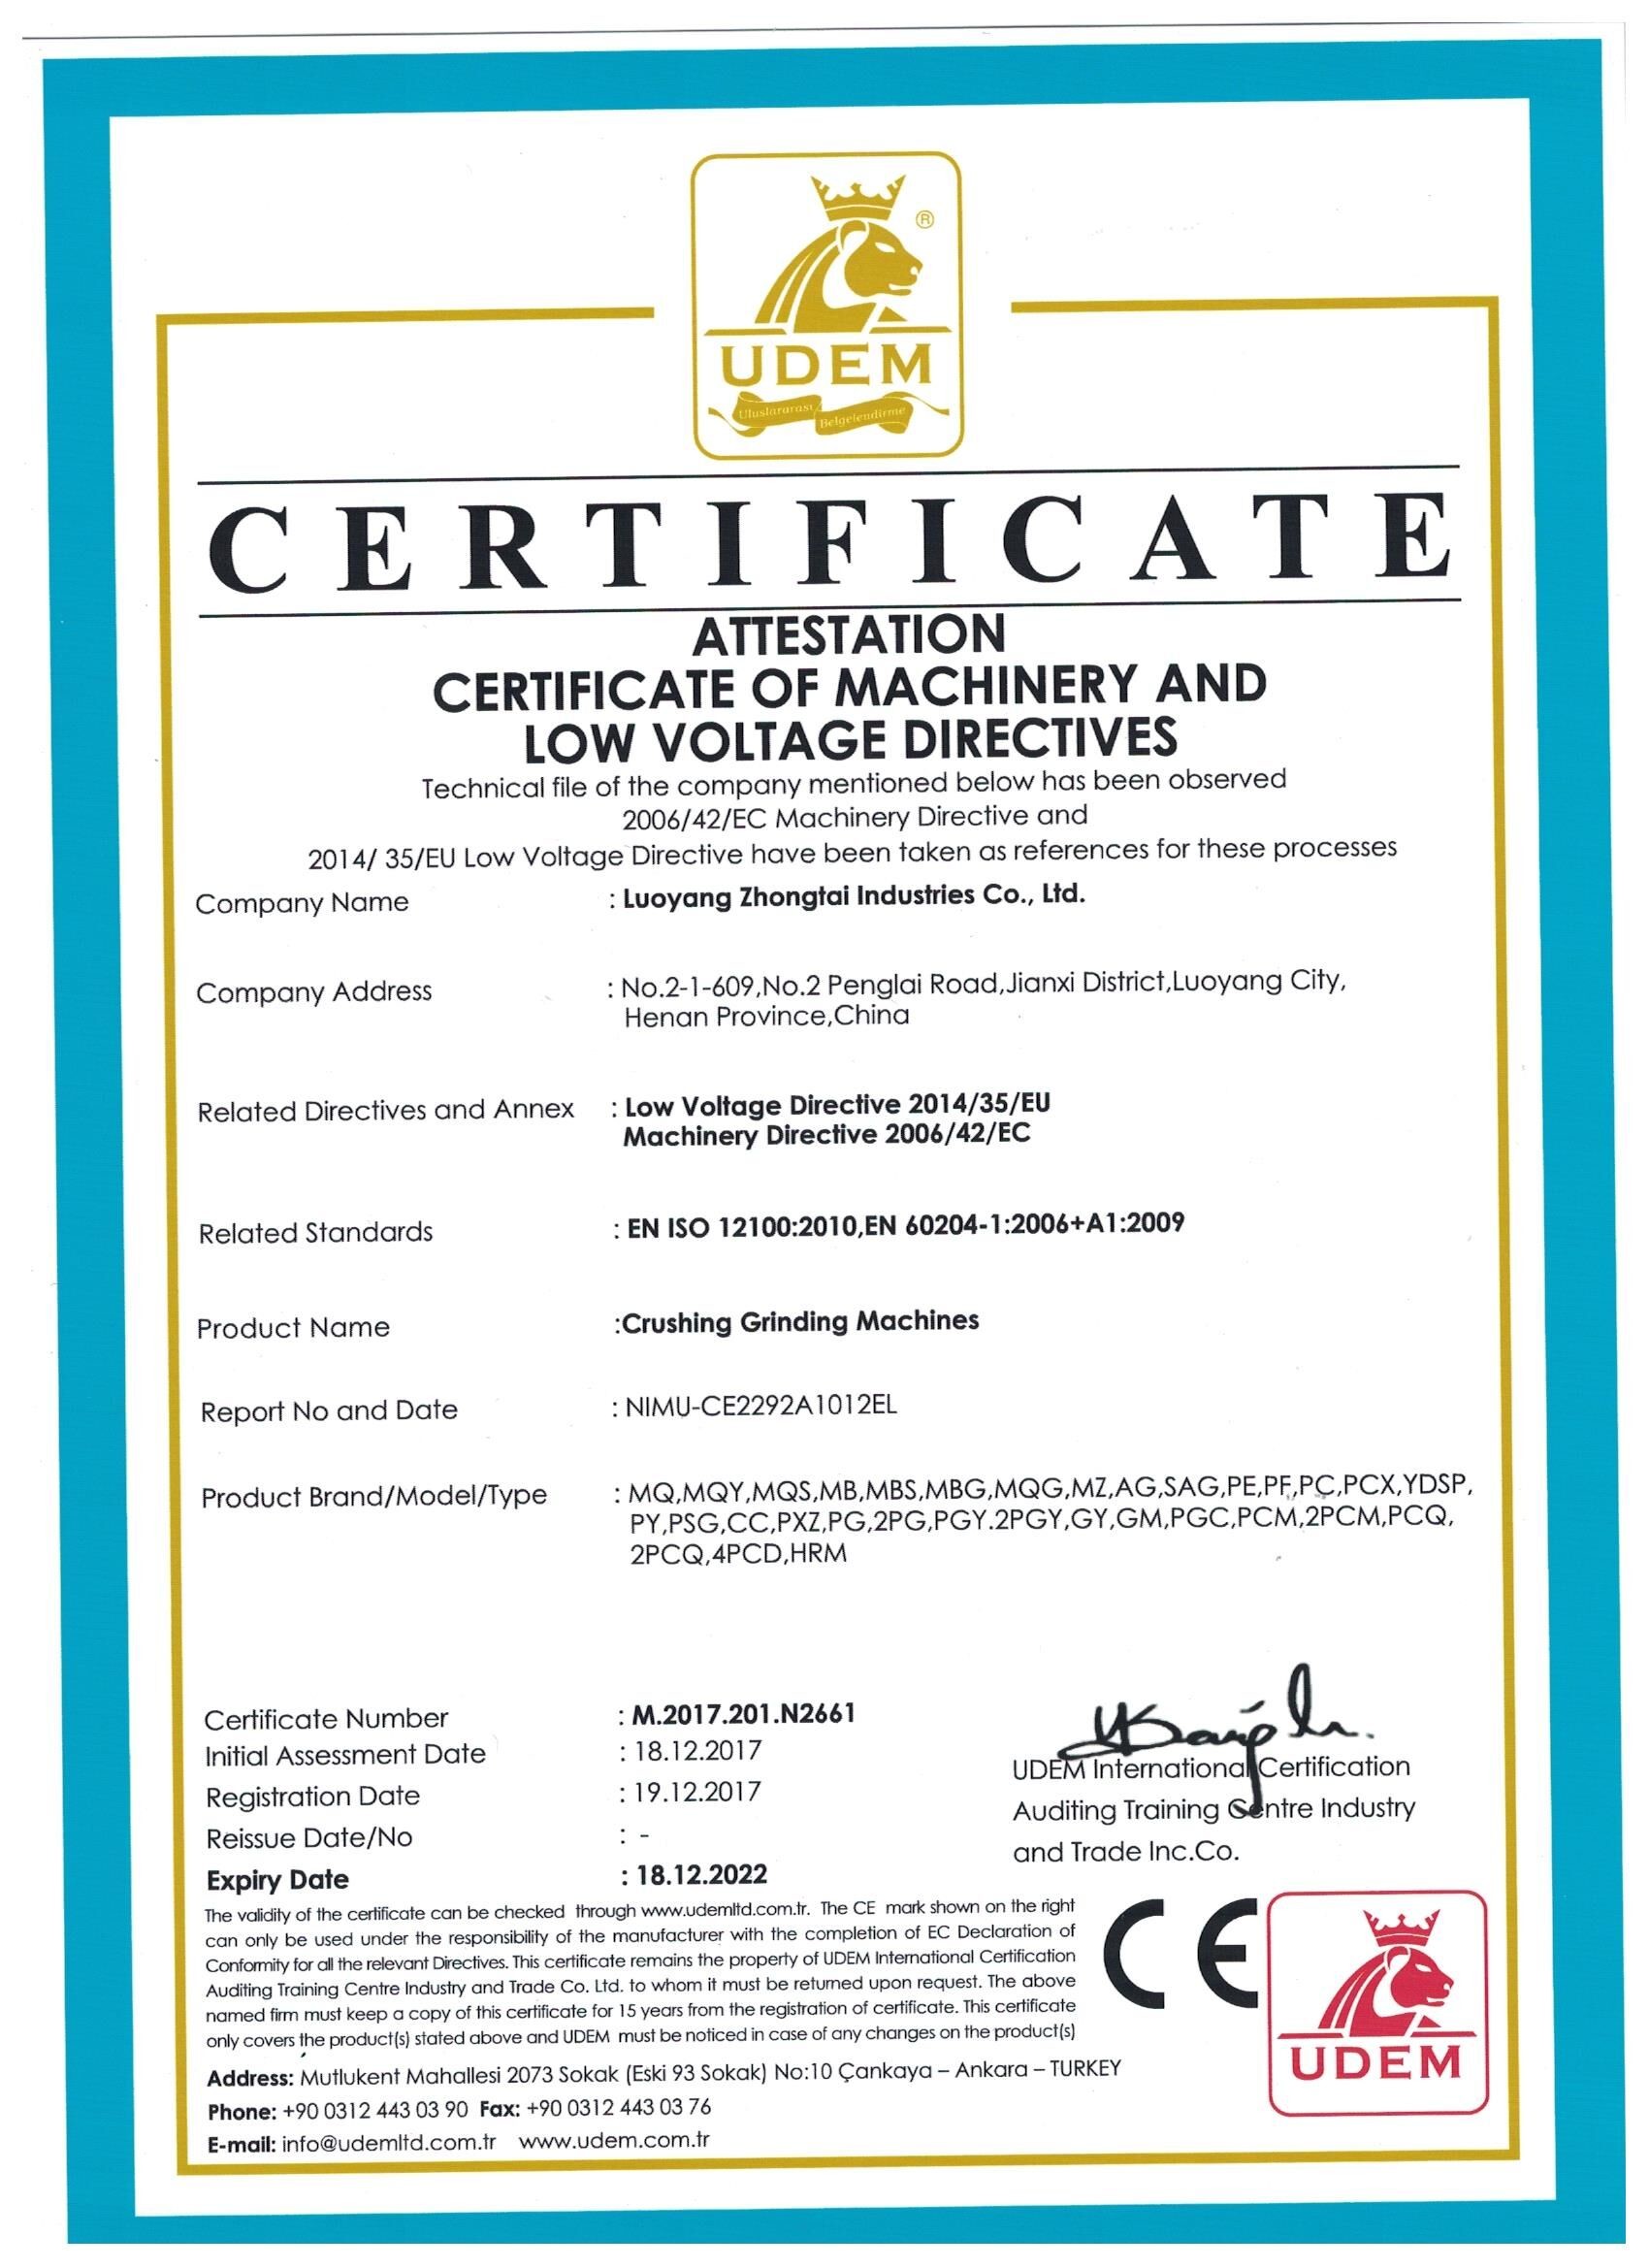 Luoyang Zhongtai Industrial Co., Ltd. Certifications